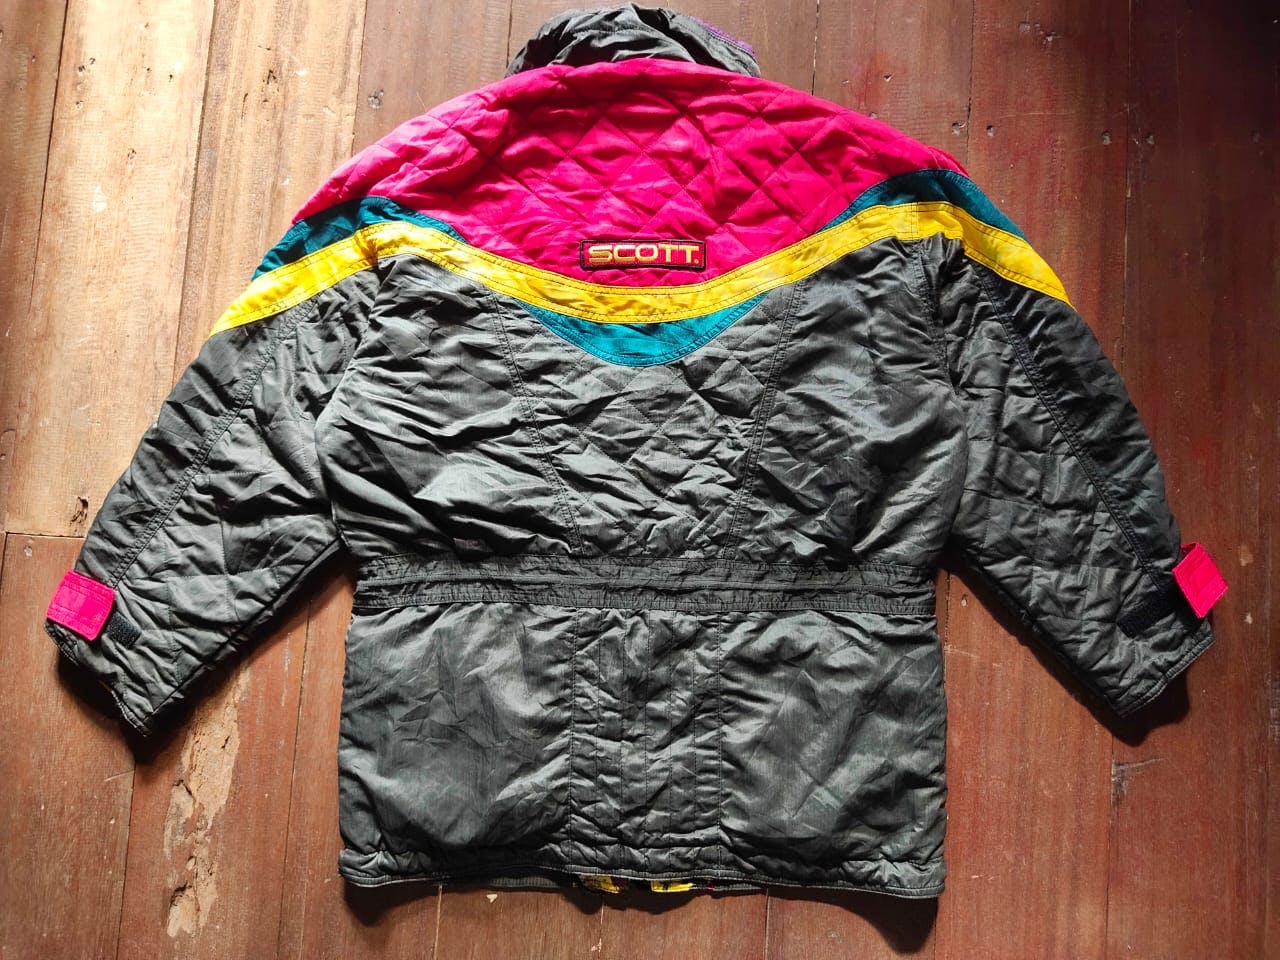 Schott rare unisex winter session jacket - 2